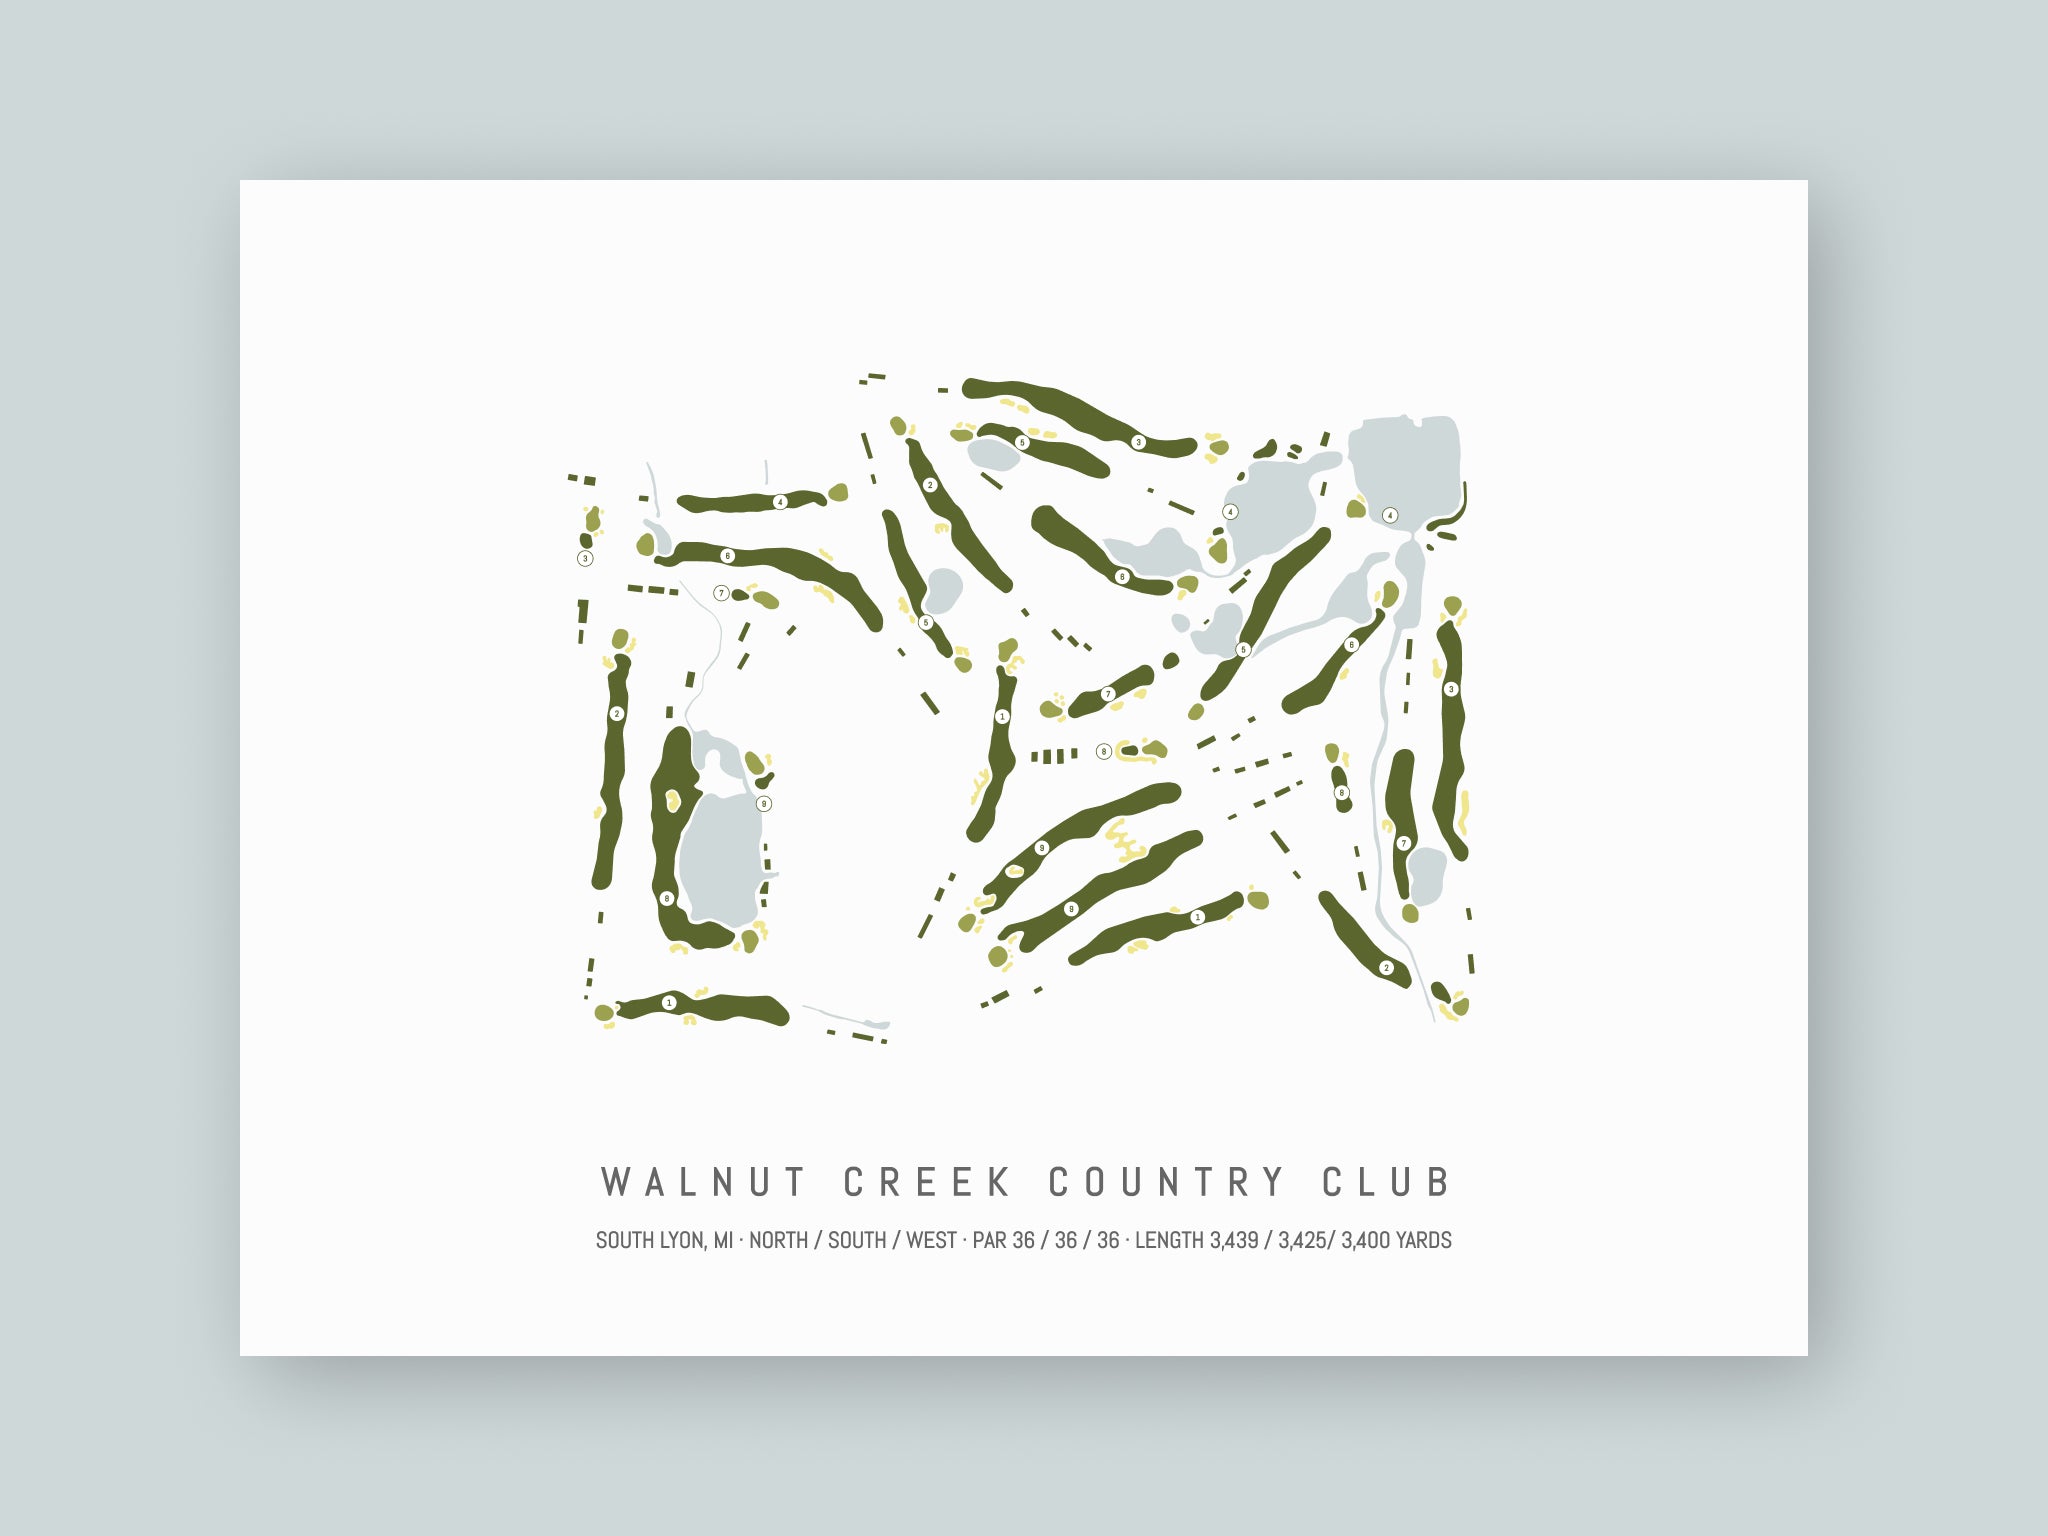 Walnut-Creek-Country-Club-MI--Unframed-24x18-With-Hole-Numbers